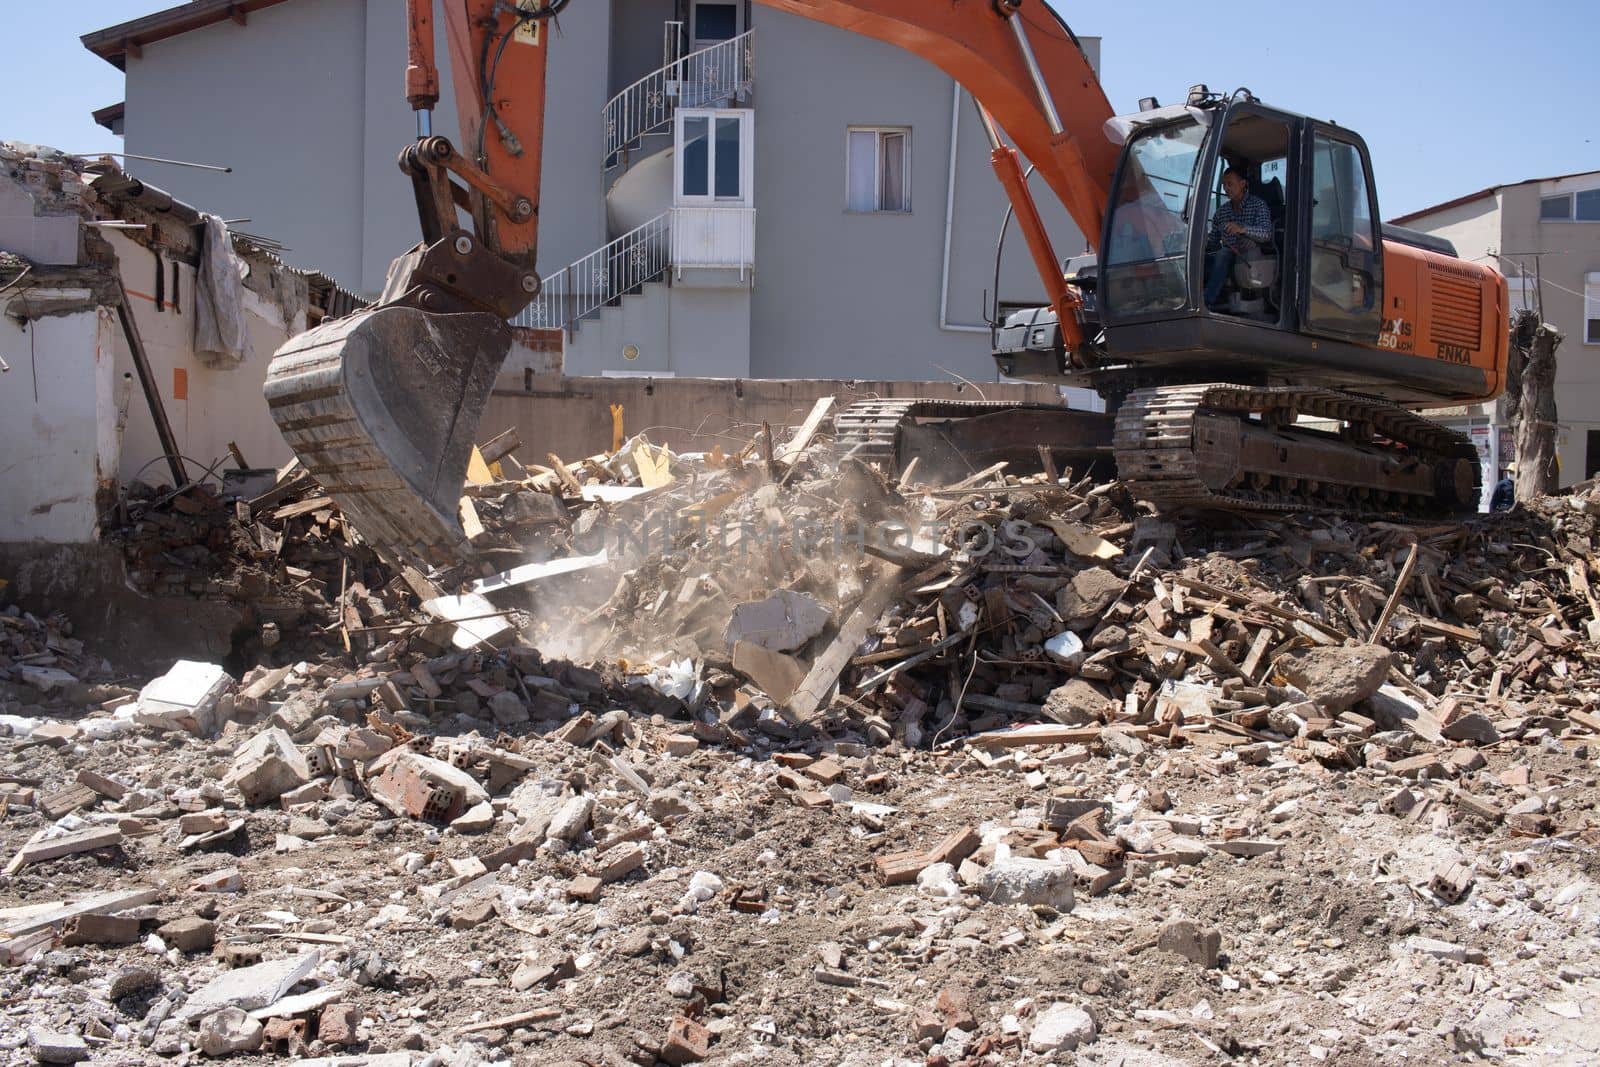 Urla, Turkey - may 13, 2020 : excavator loading debris of a destroyed building in truck. by senkaya